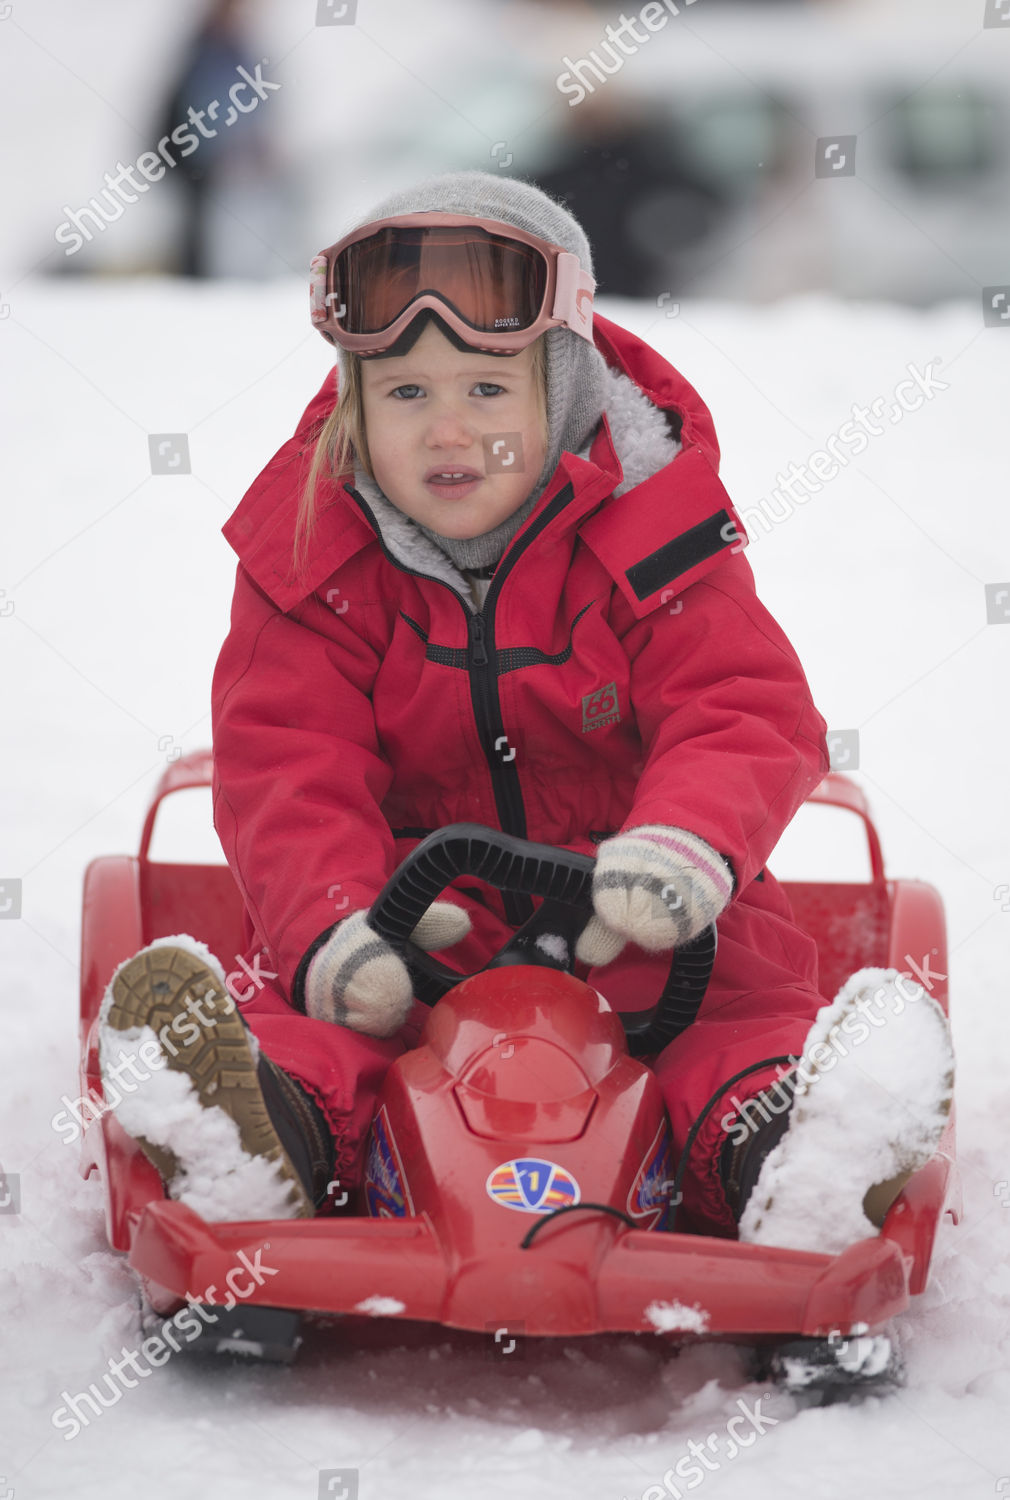 danish-royals-skiing-holiday-photocall-verbier-switzerland-shutterstock-editorial-3571656k.jpg